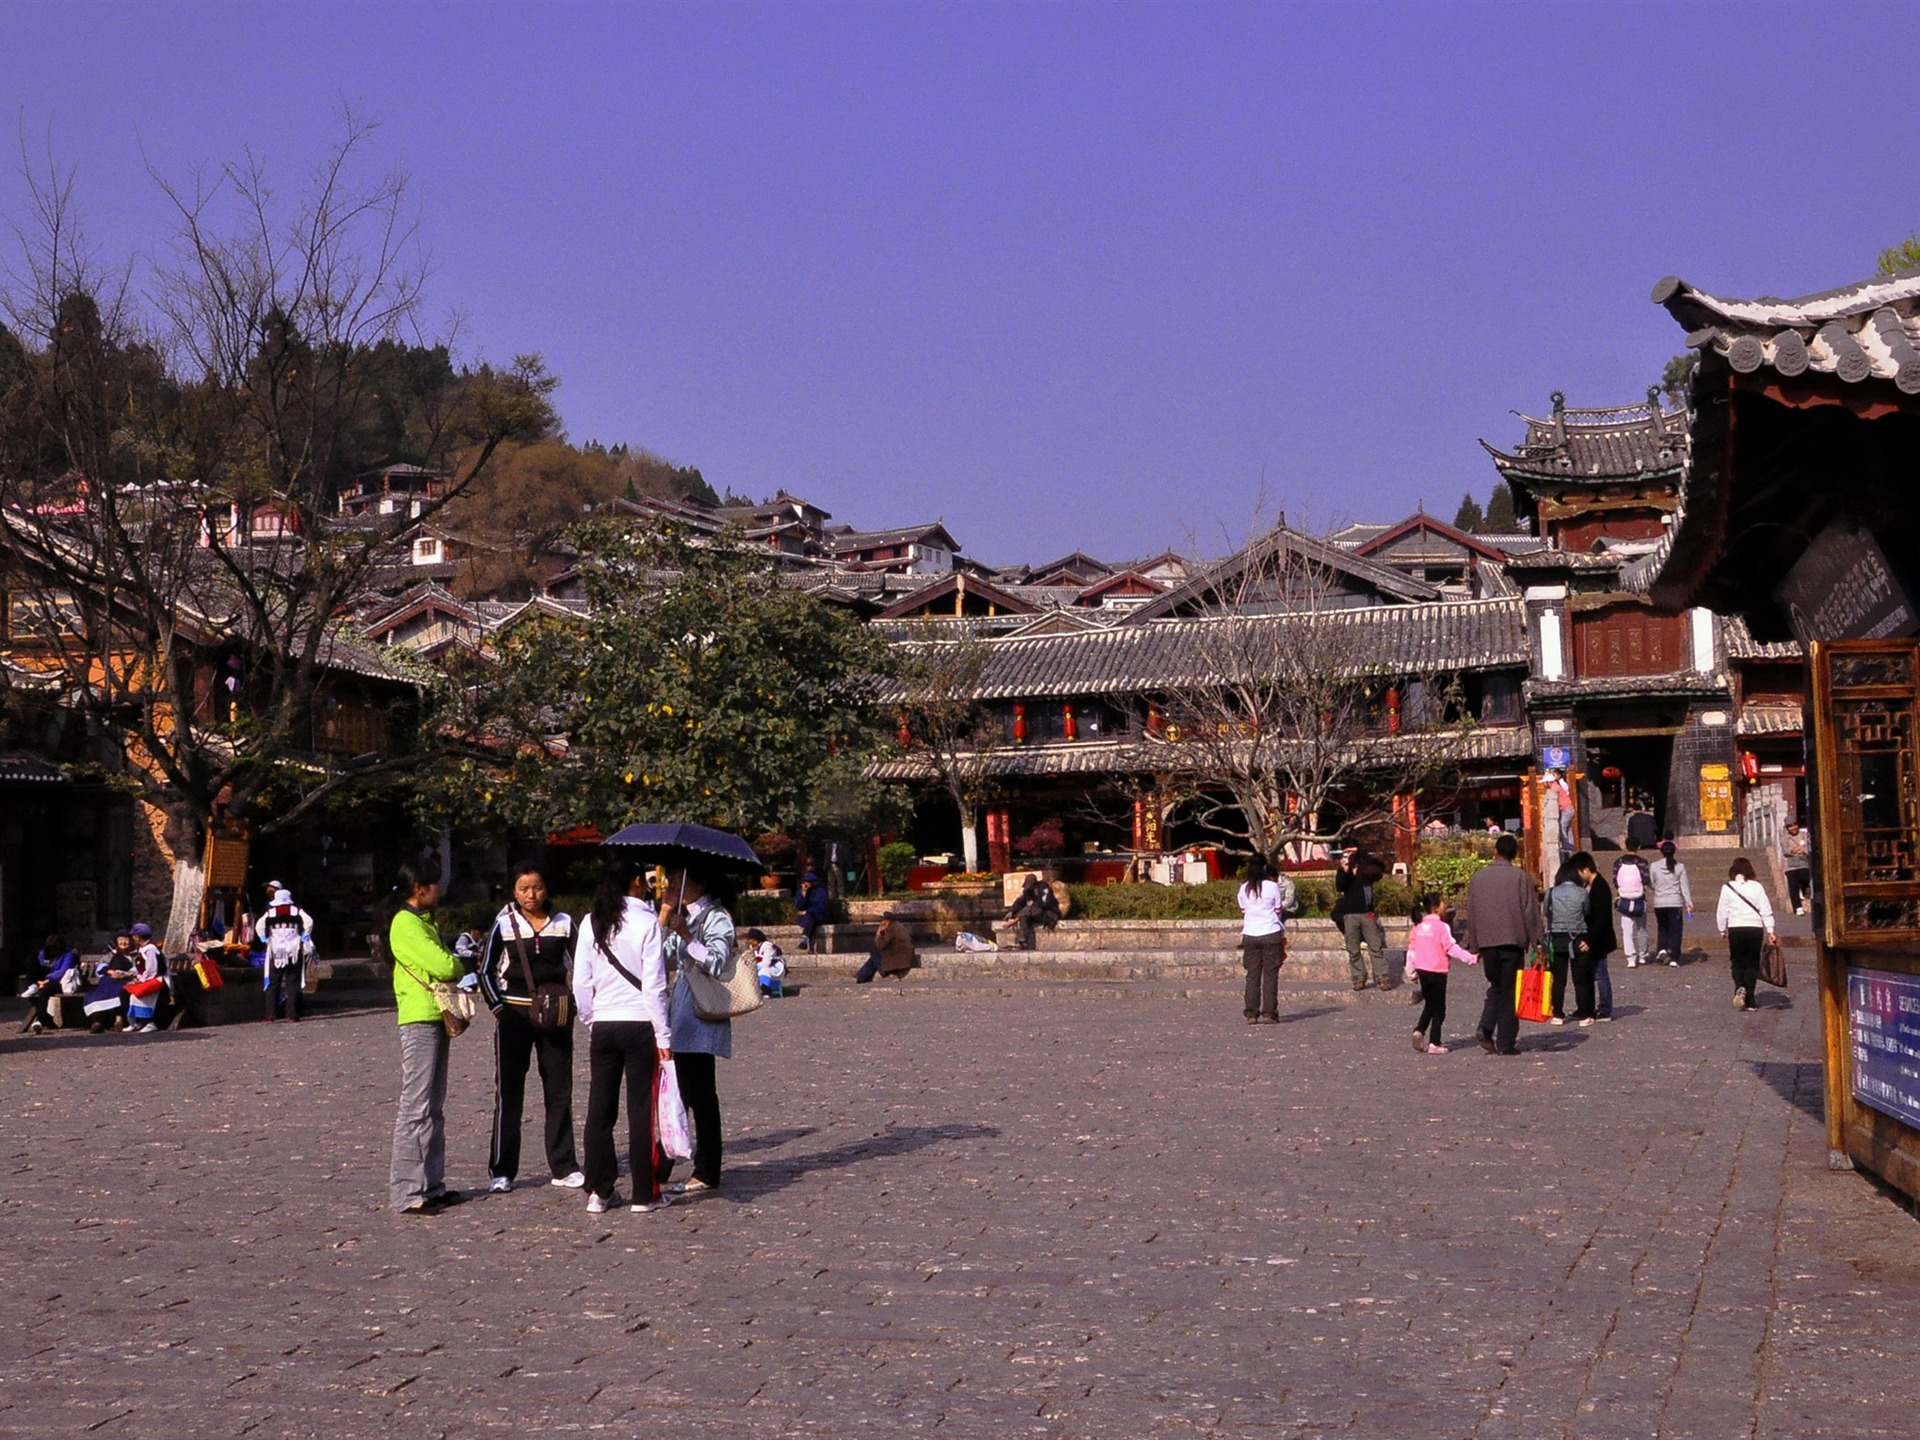 Lijiang ancient town atmosphere (2) (old Hong OK works) #12 - 1920x1440